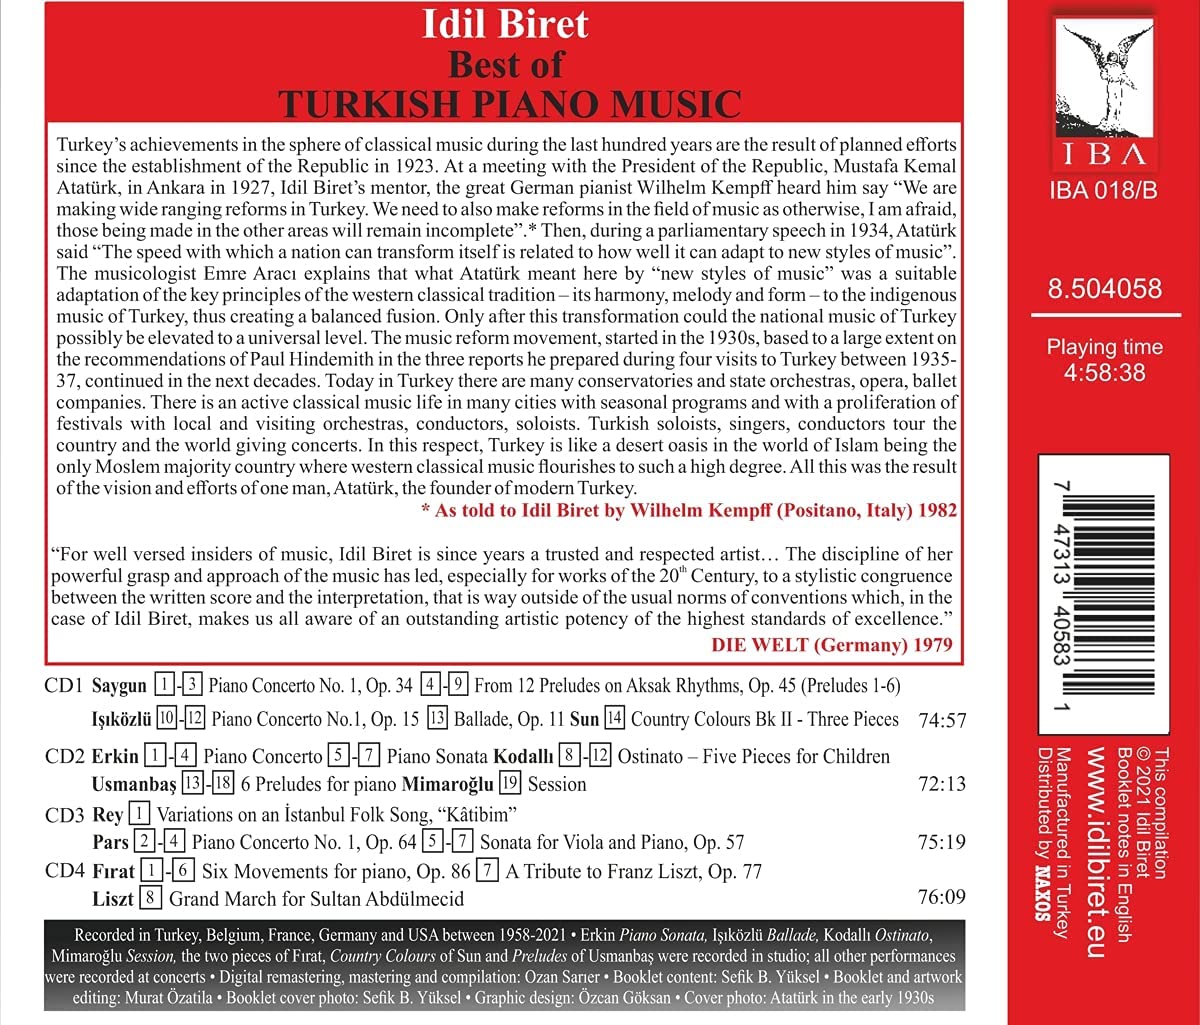 Idil Biret 터키 작곡가들의 피아노 음악 베스트 - 이딜 비렛 (Best of Turkish Piano Music) 